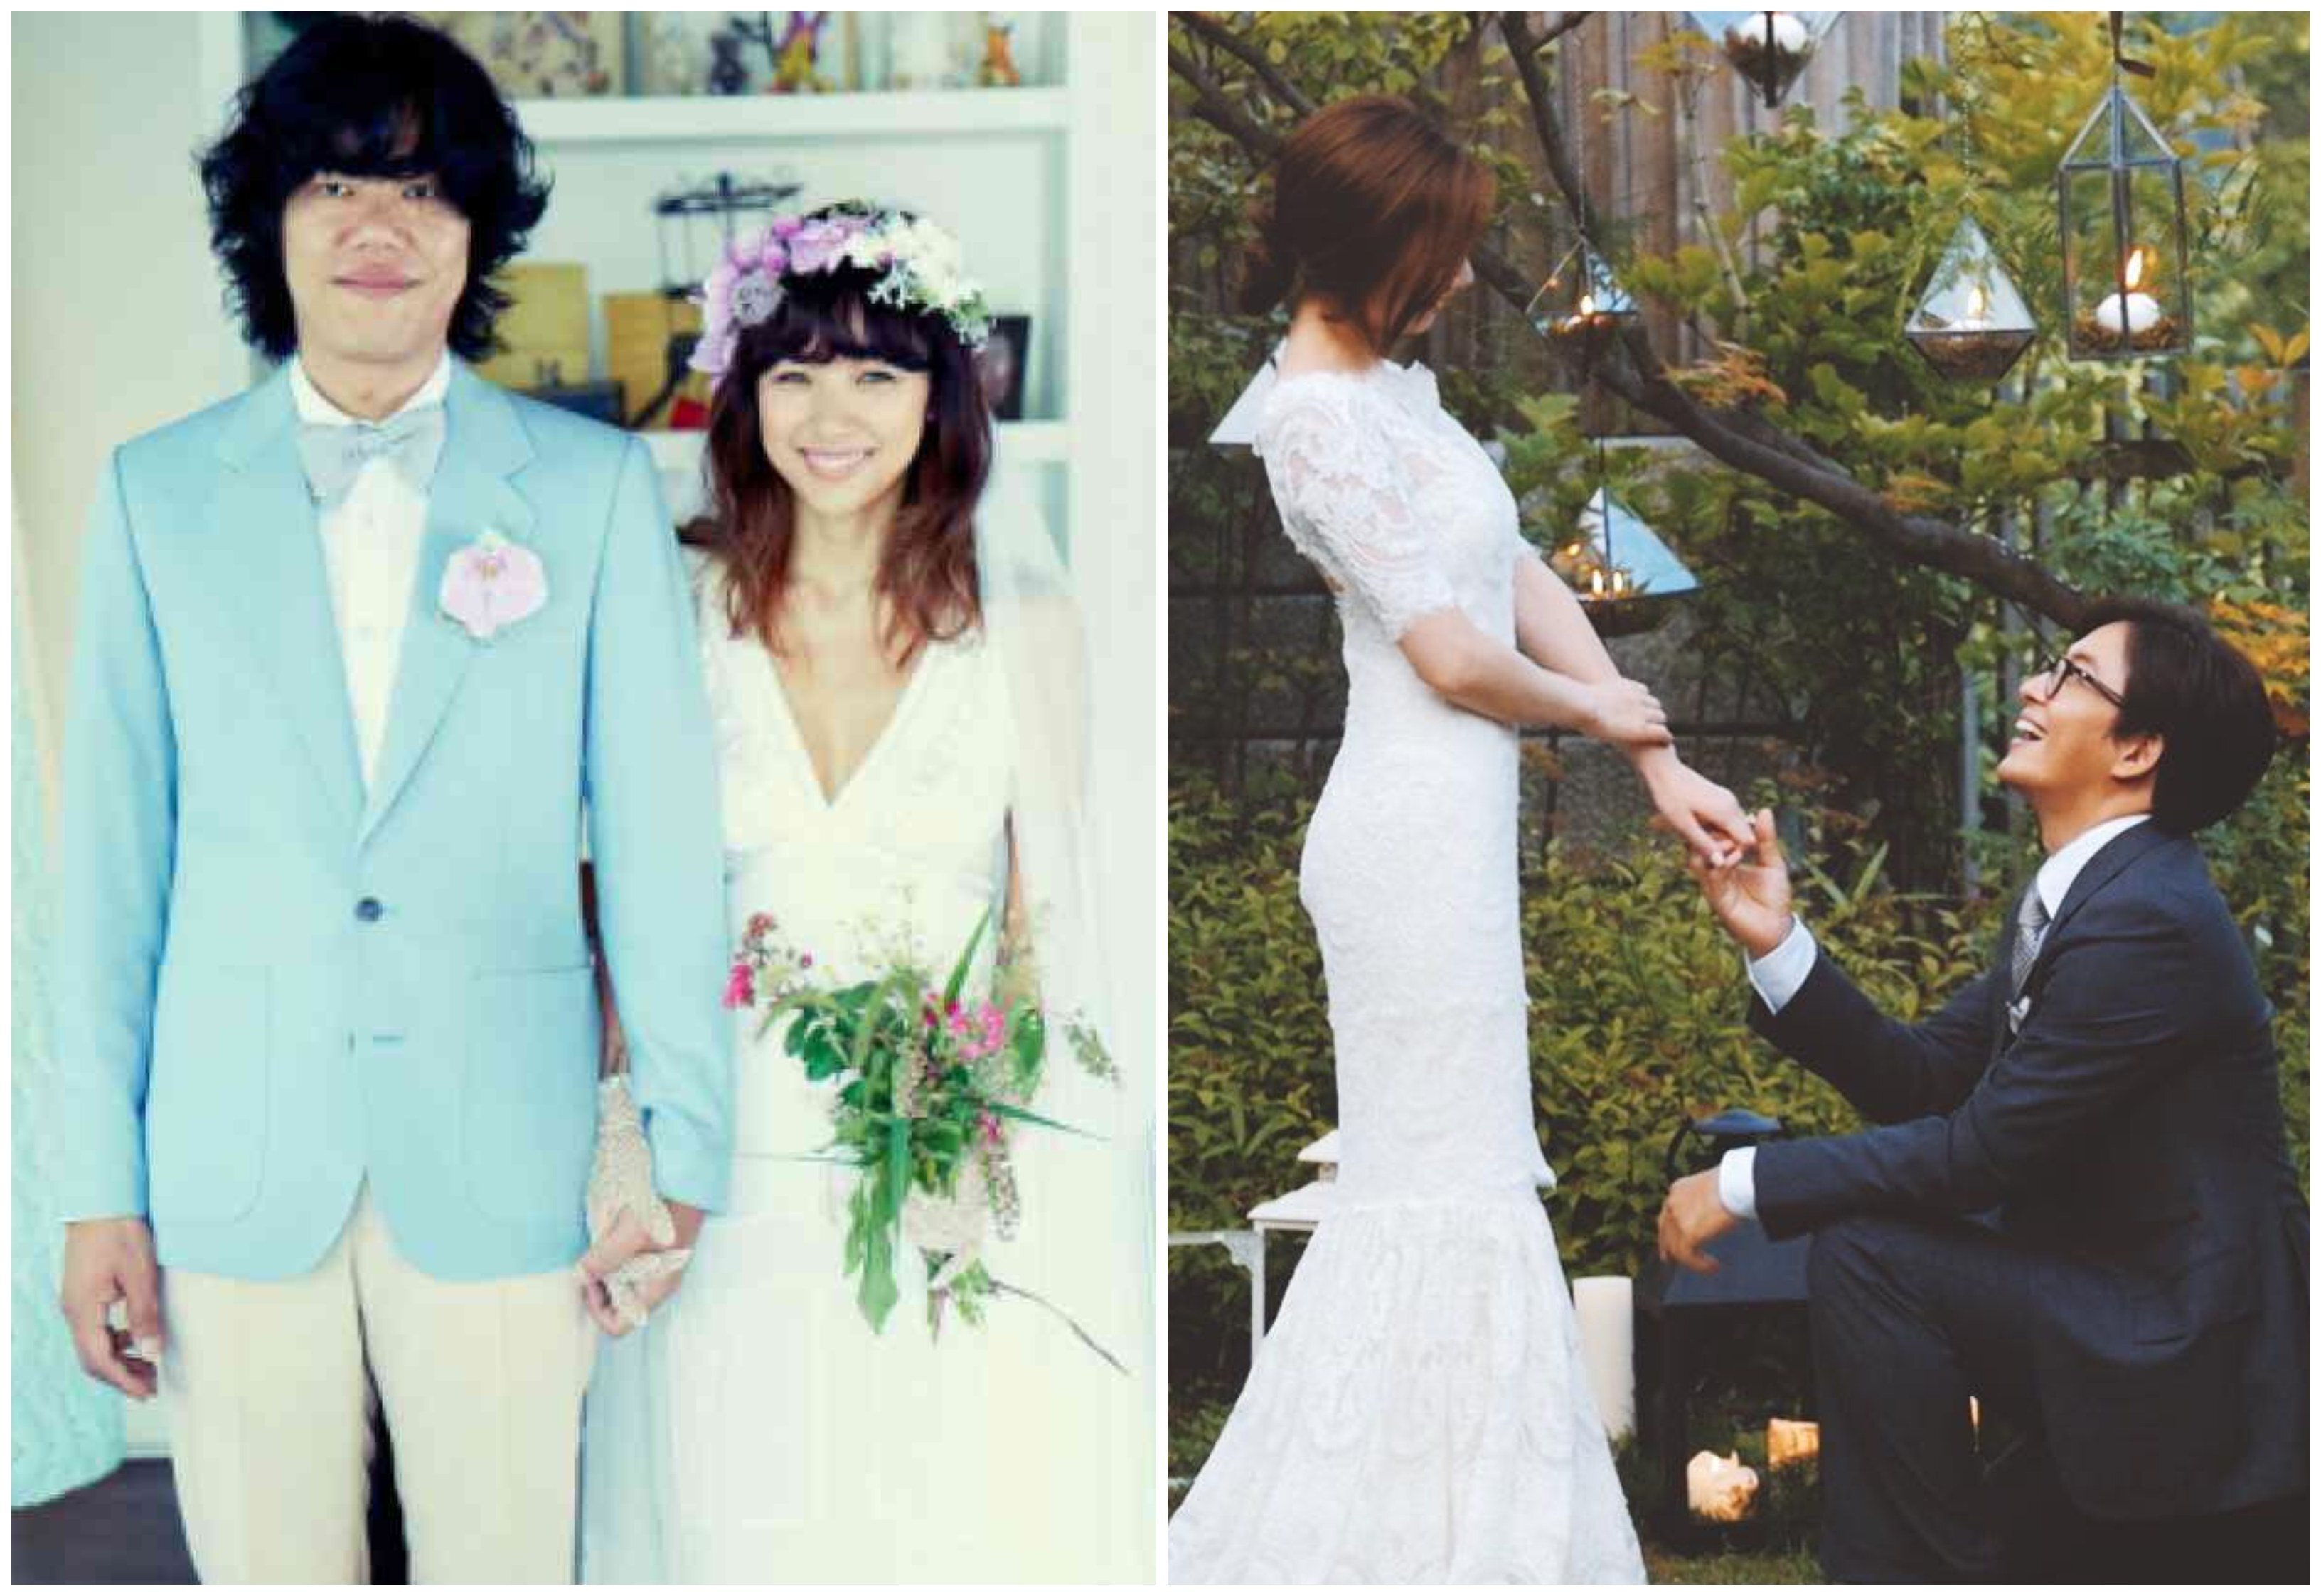 Musician Lee Sang-soon and K-pop star Lee Hyori, and Bae Yong-joon and Park Soo-jin, all splurged on their wedding days. Photos: Hyori Together, @yongjoon_bae/Instagram